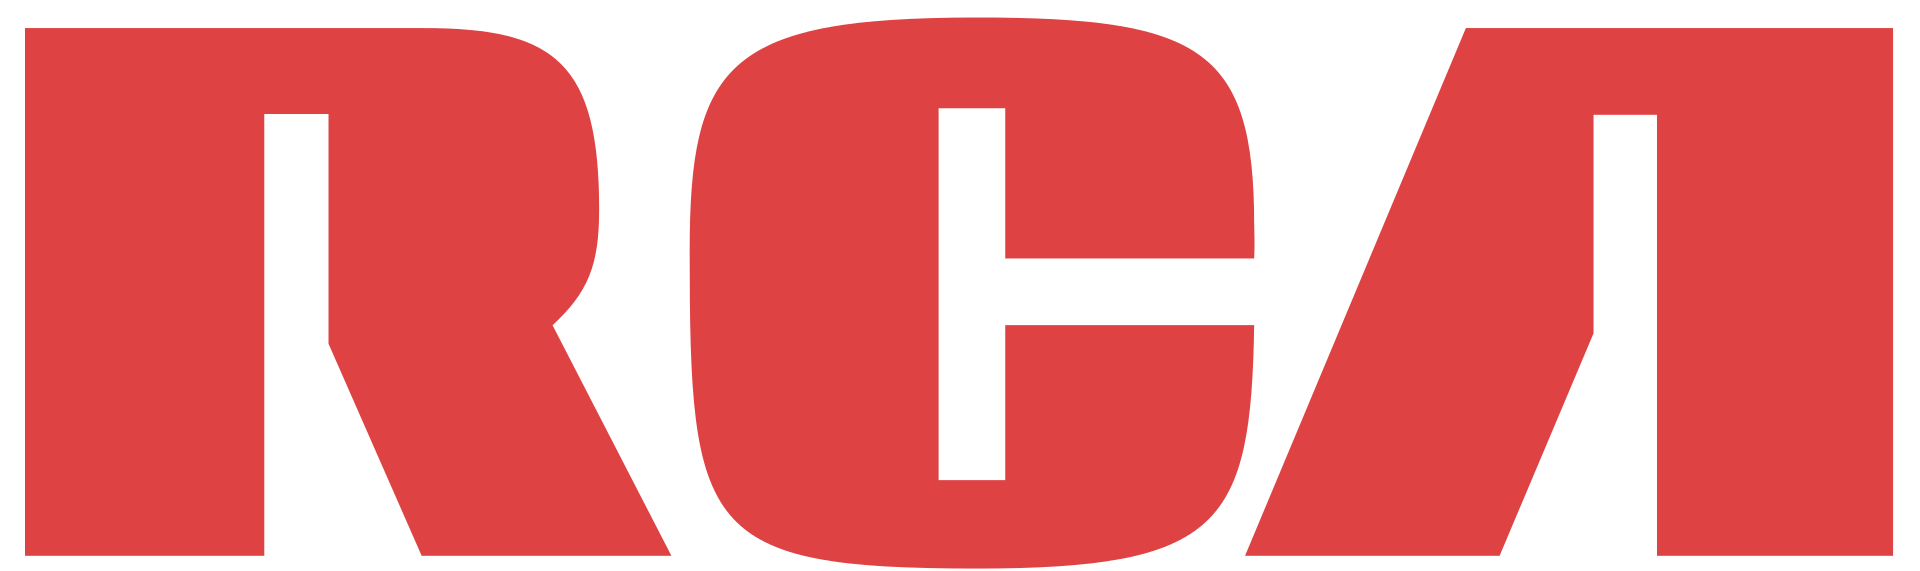 Le logo RCA d'origine. Image via Wikipedia.